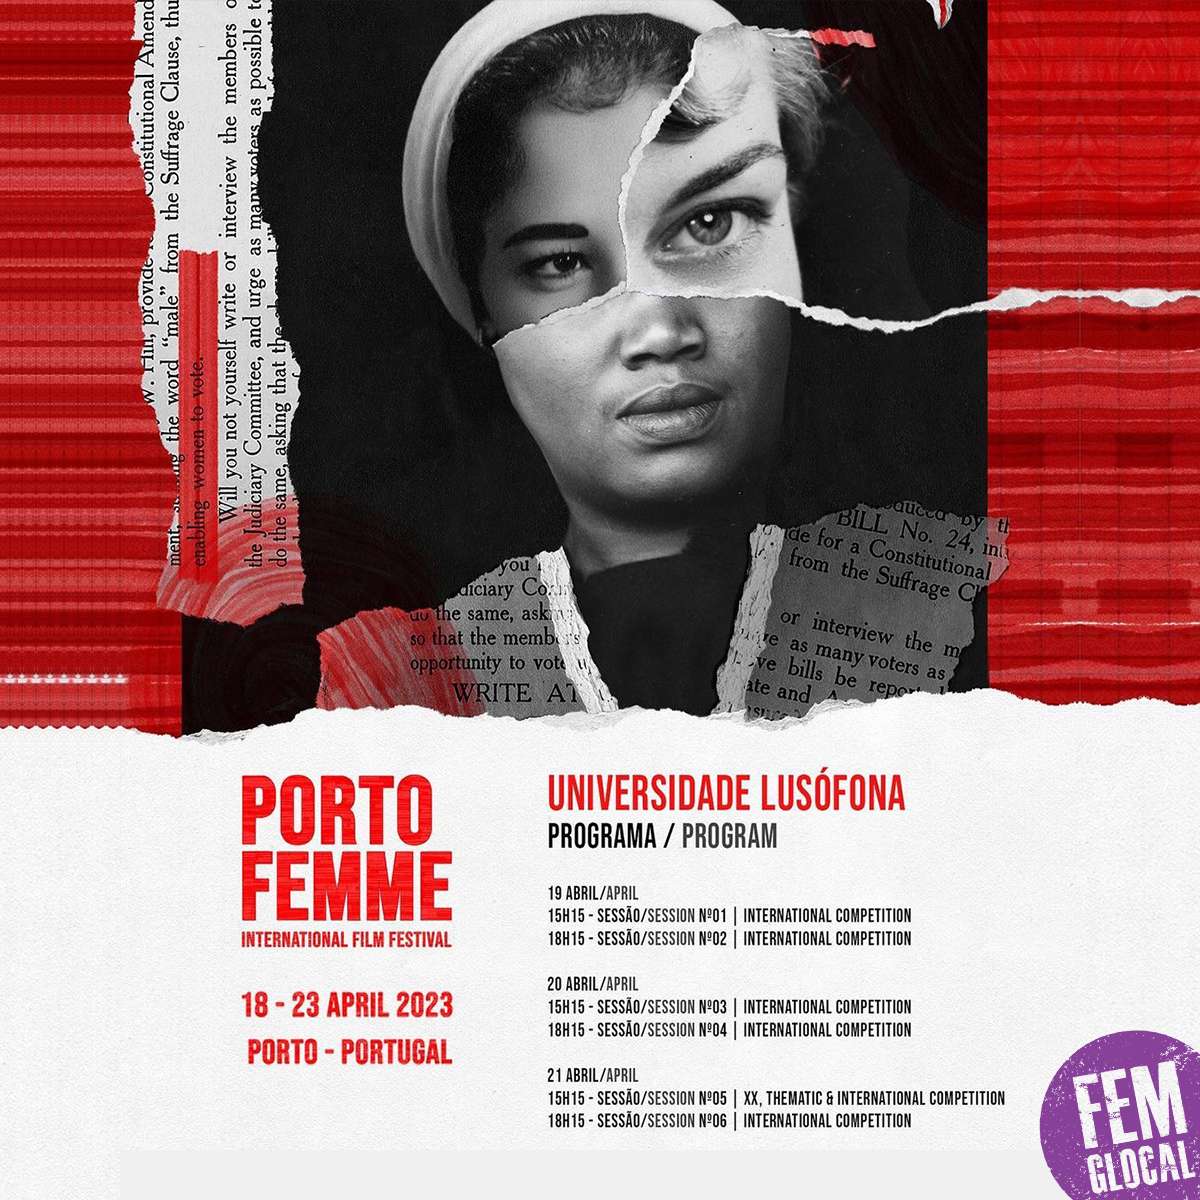 Talks at the University Porto Femme – International Film Festival: 6th Edition